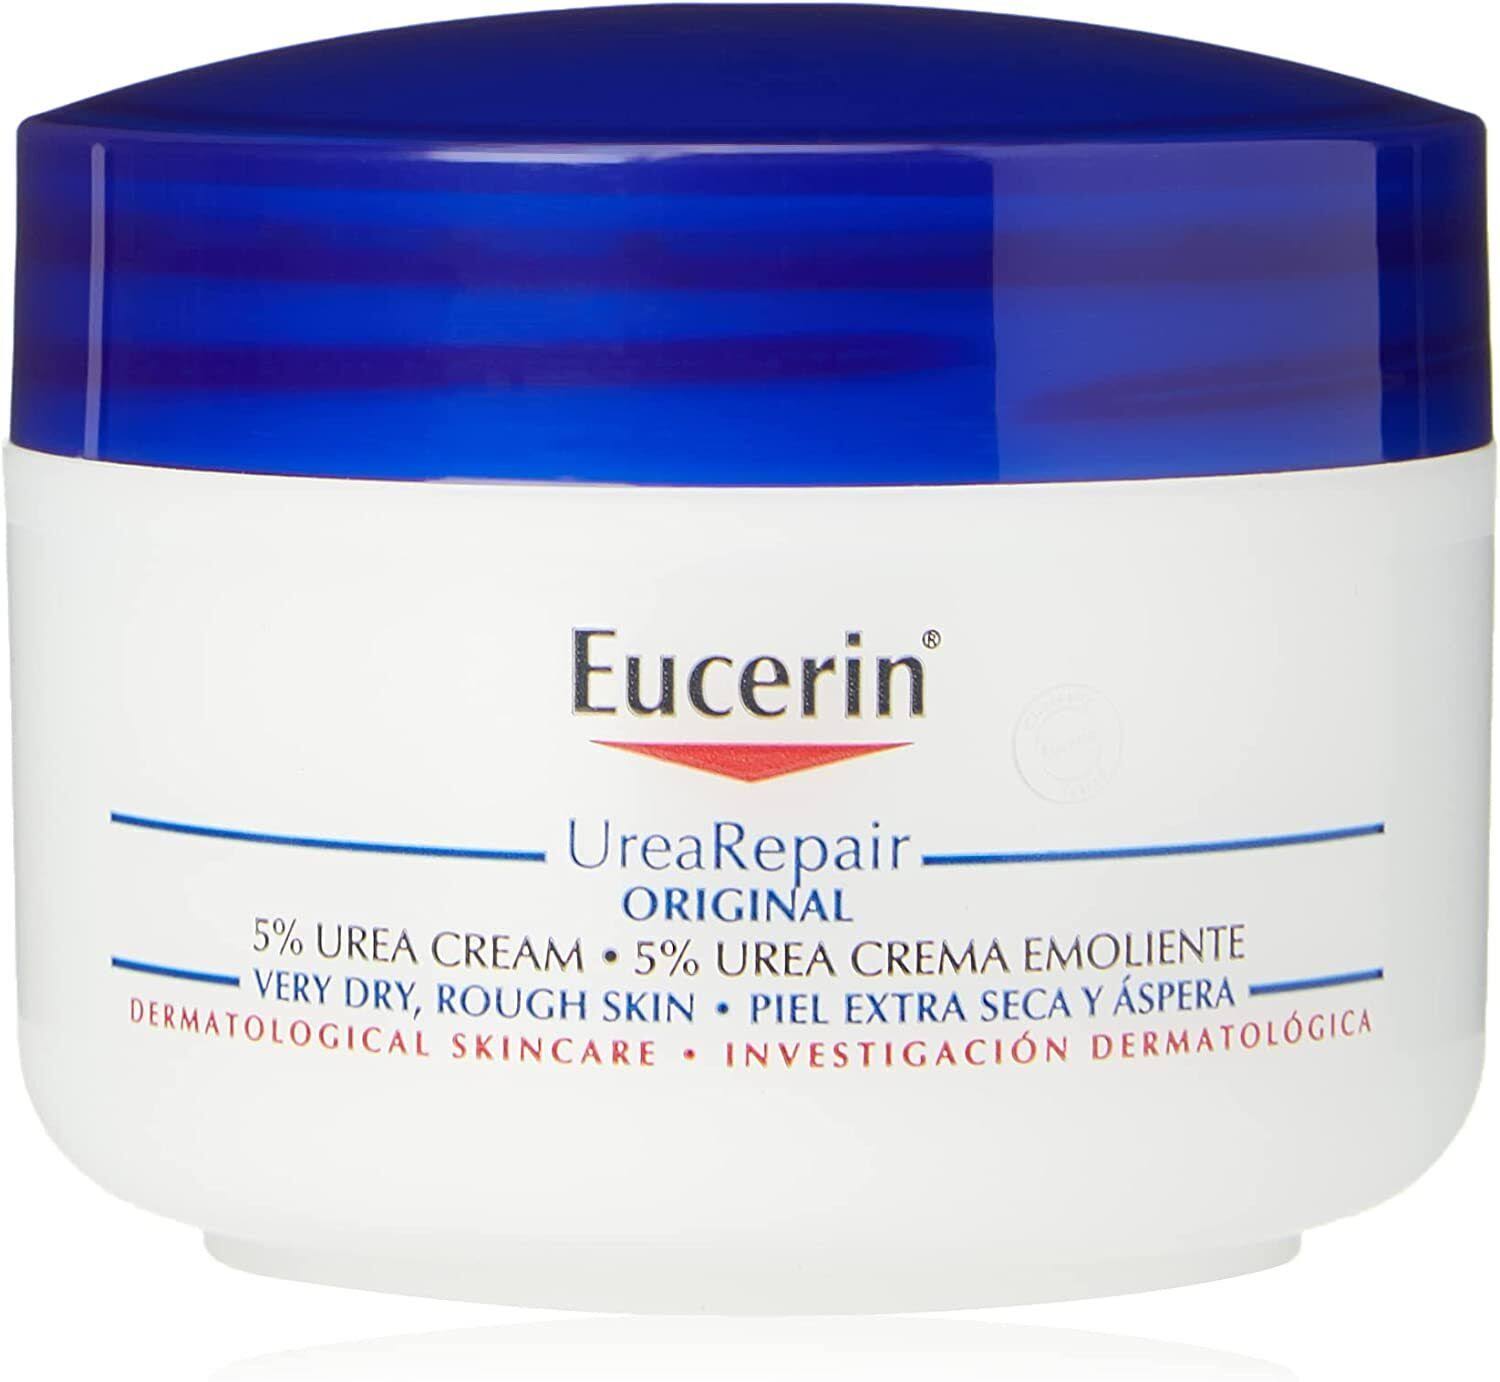 Eucerin Dry Skin Replenishing Cream - 75ml